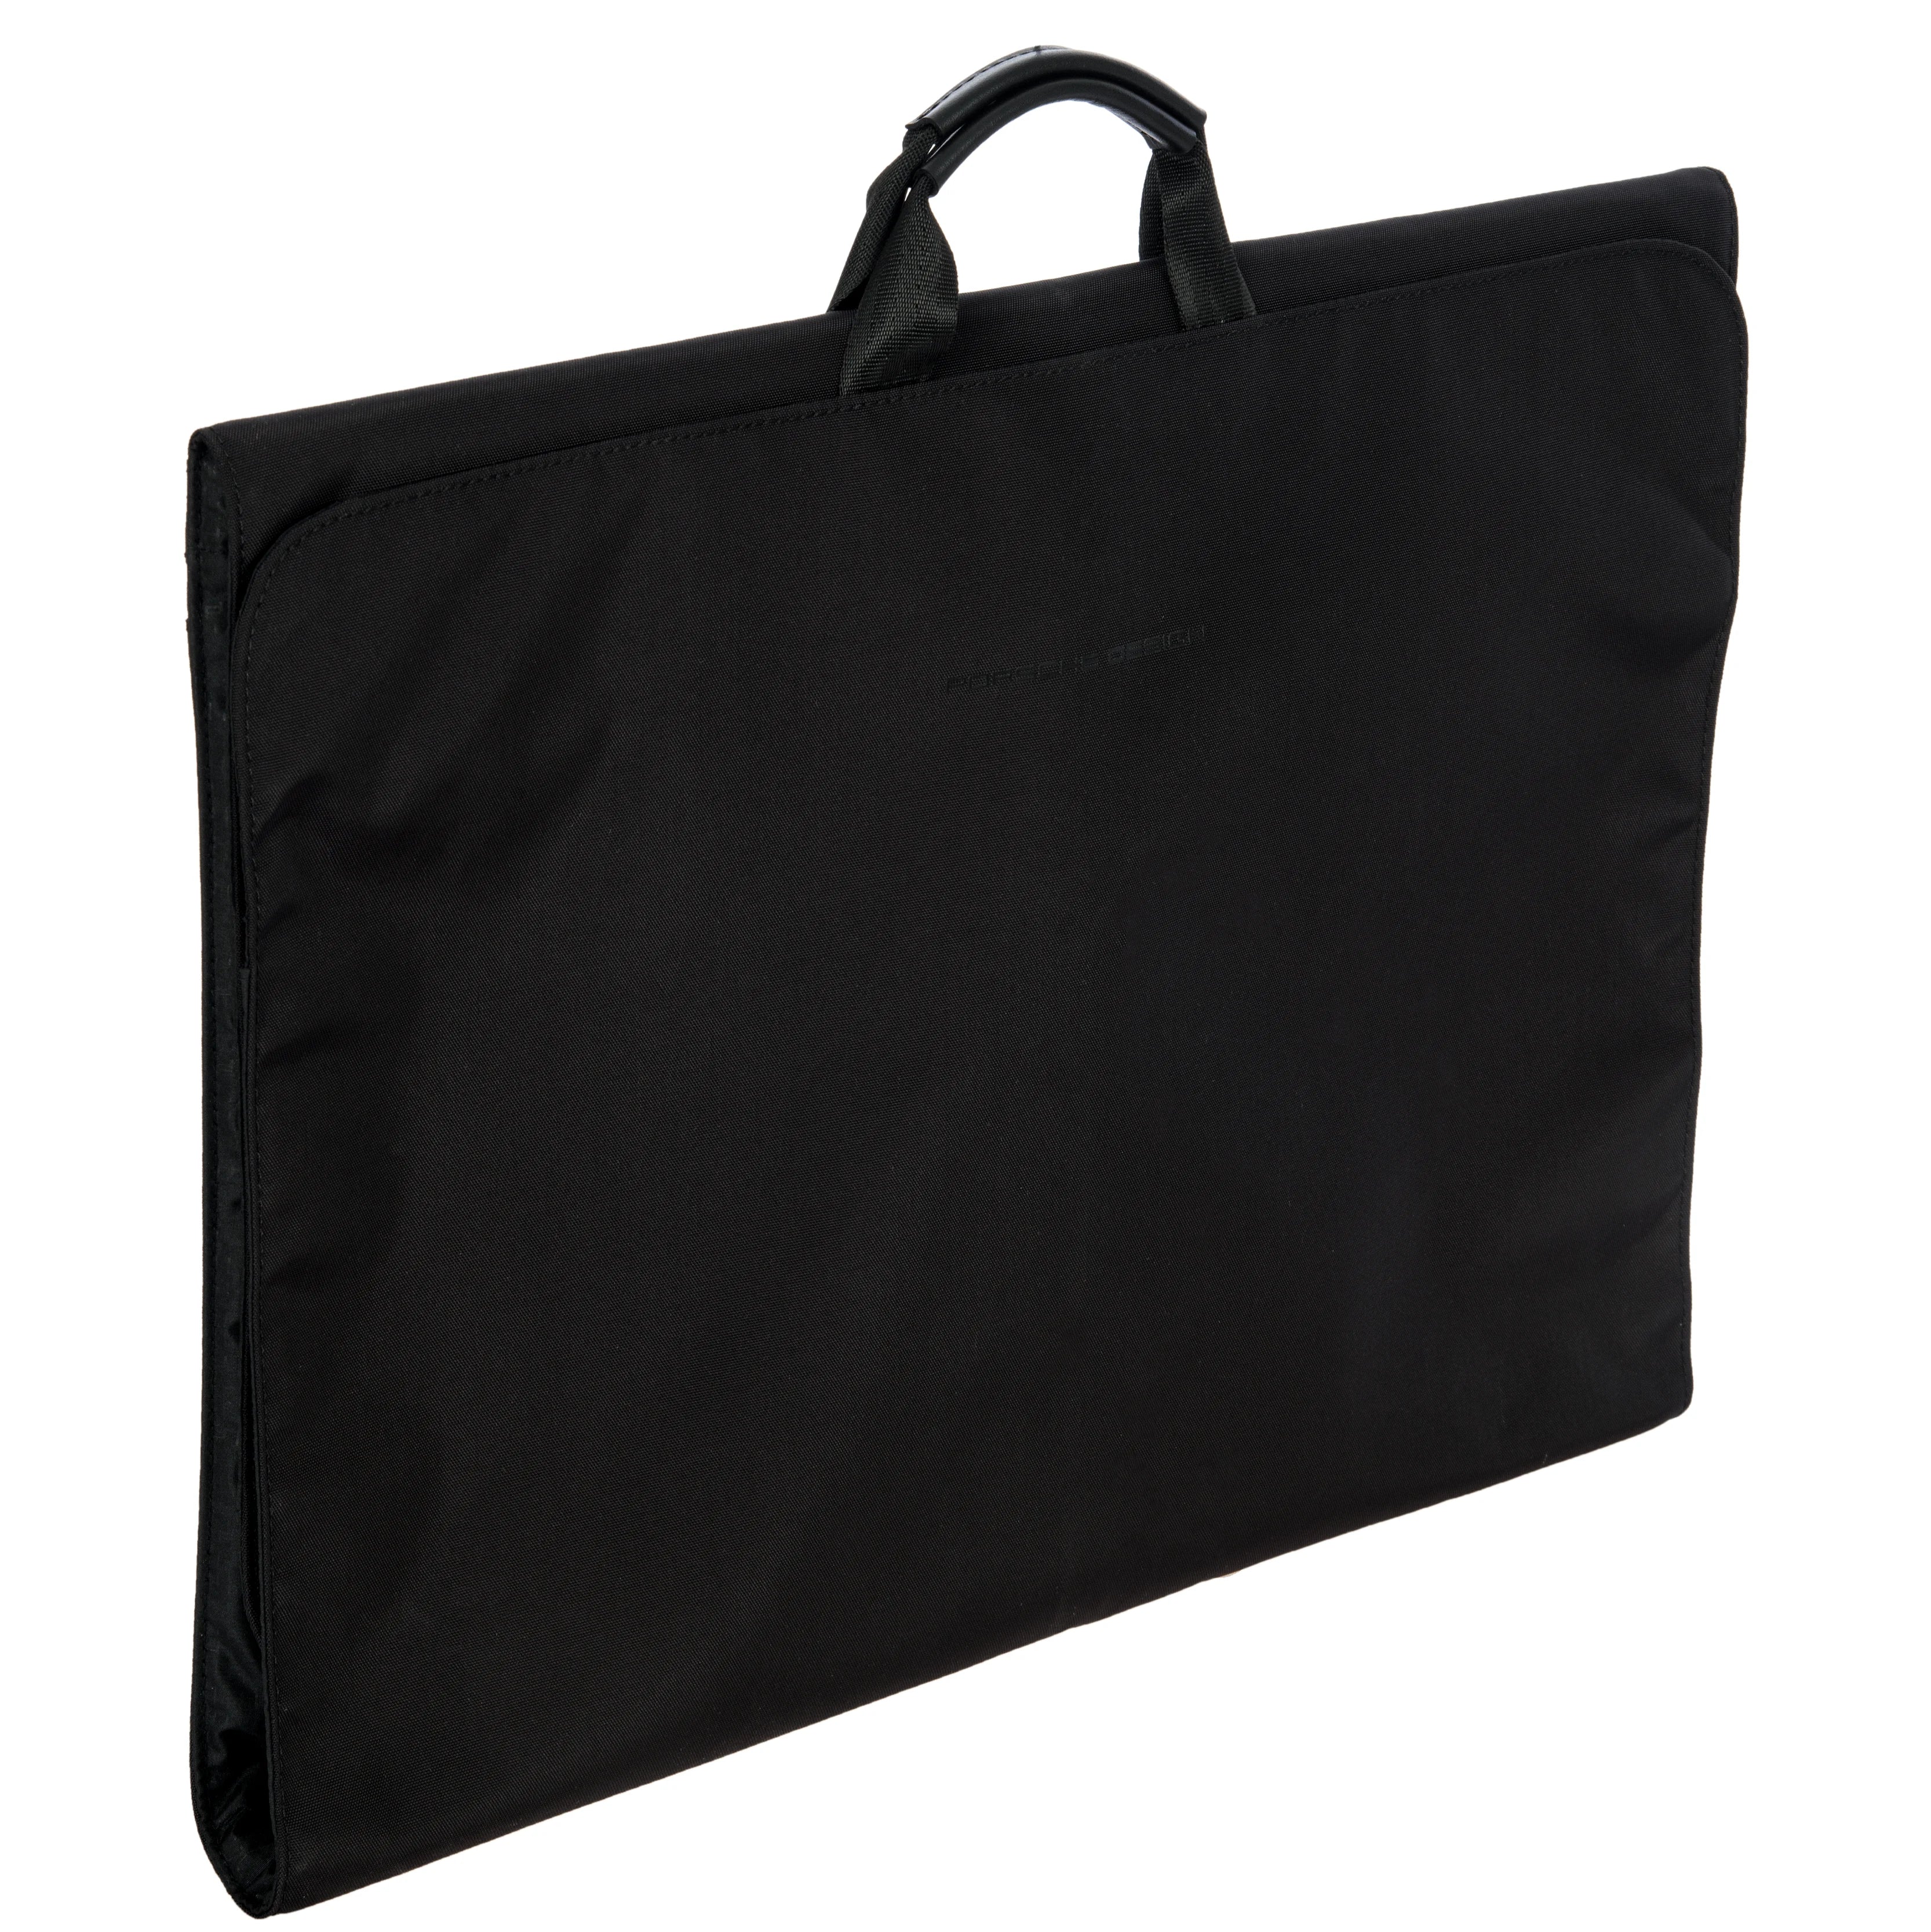 Porsche Design Accessories Garment Bag 48 cm - Black